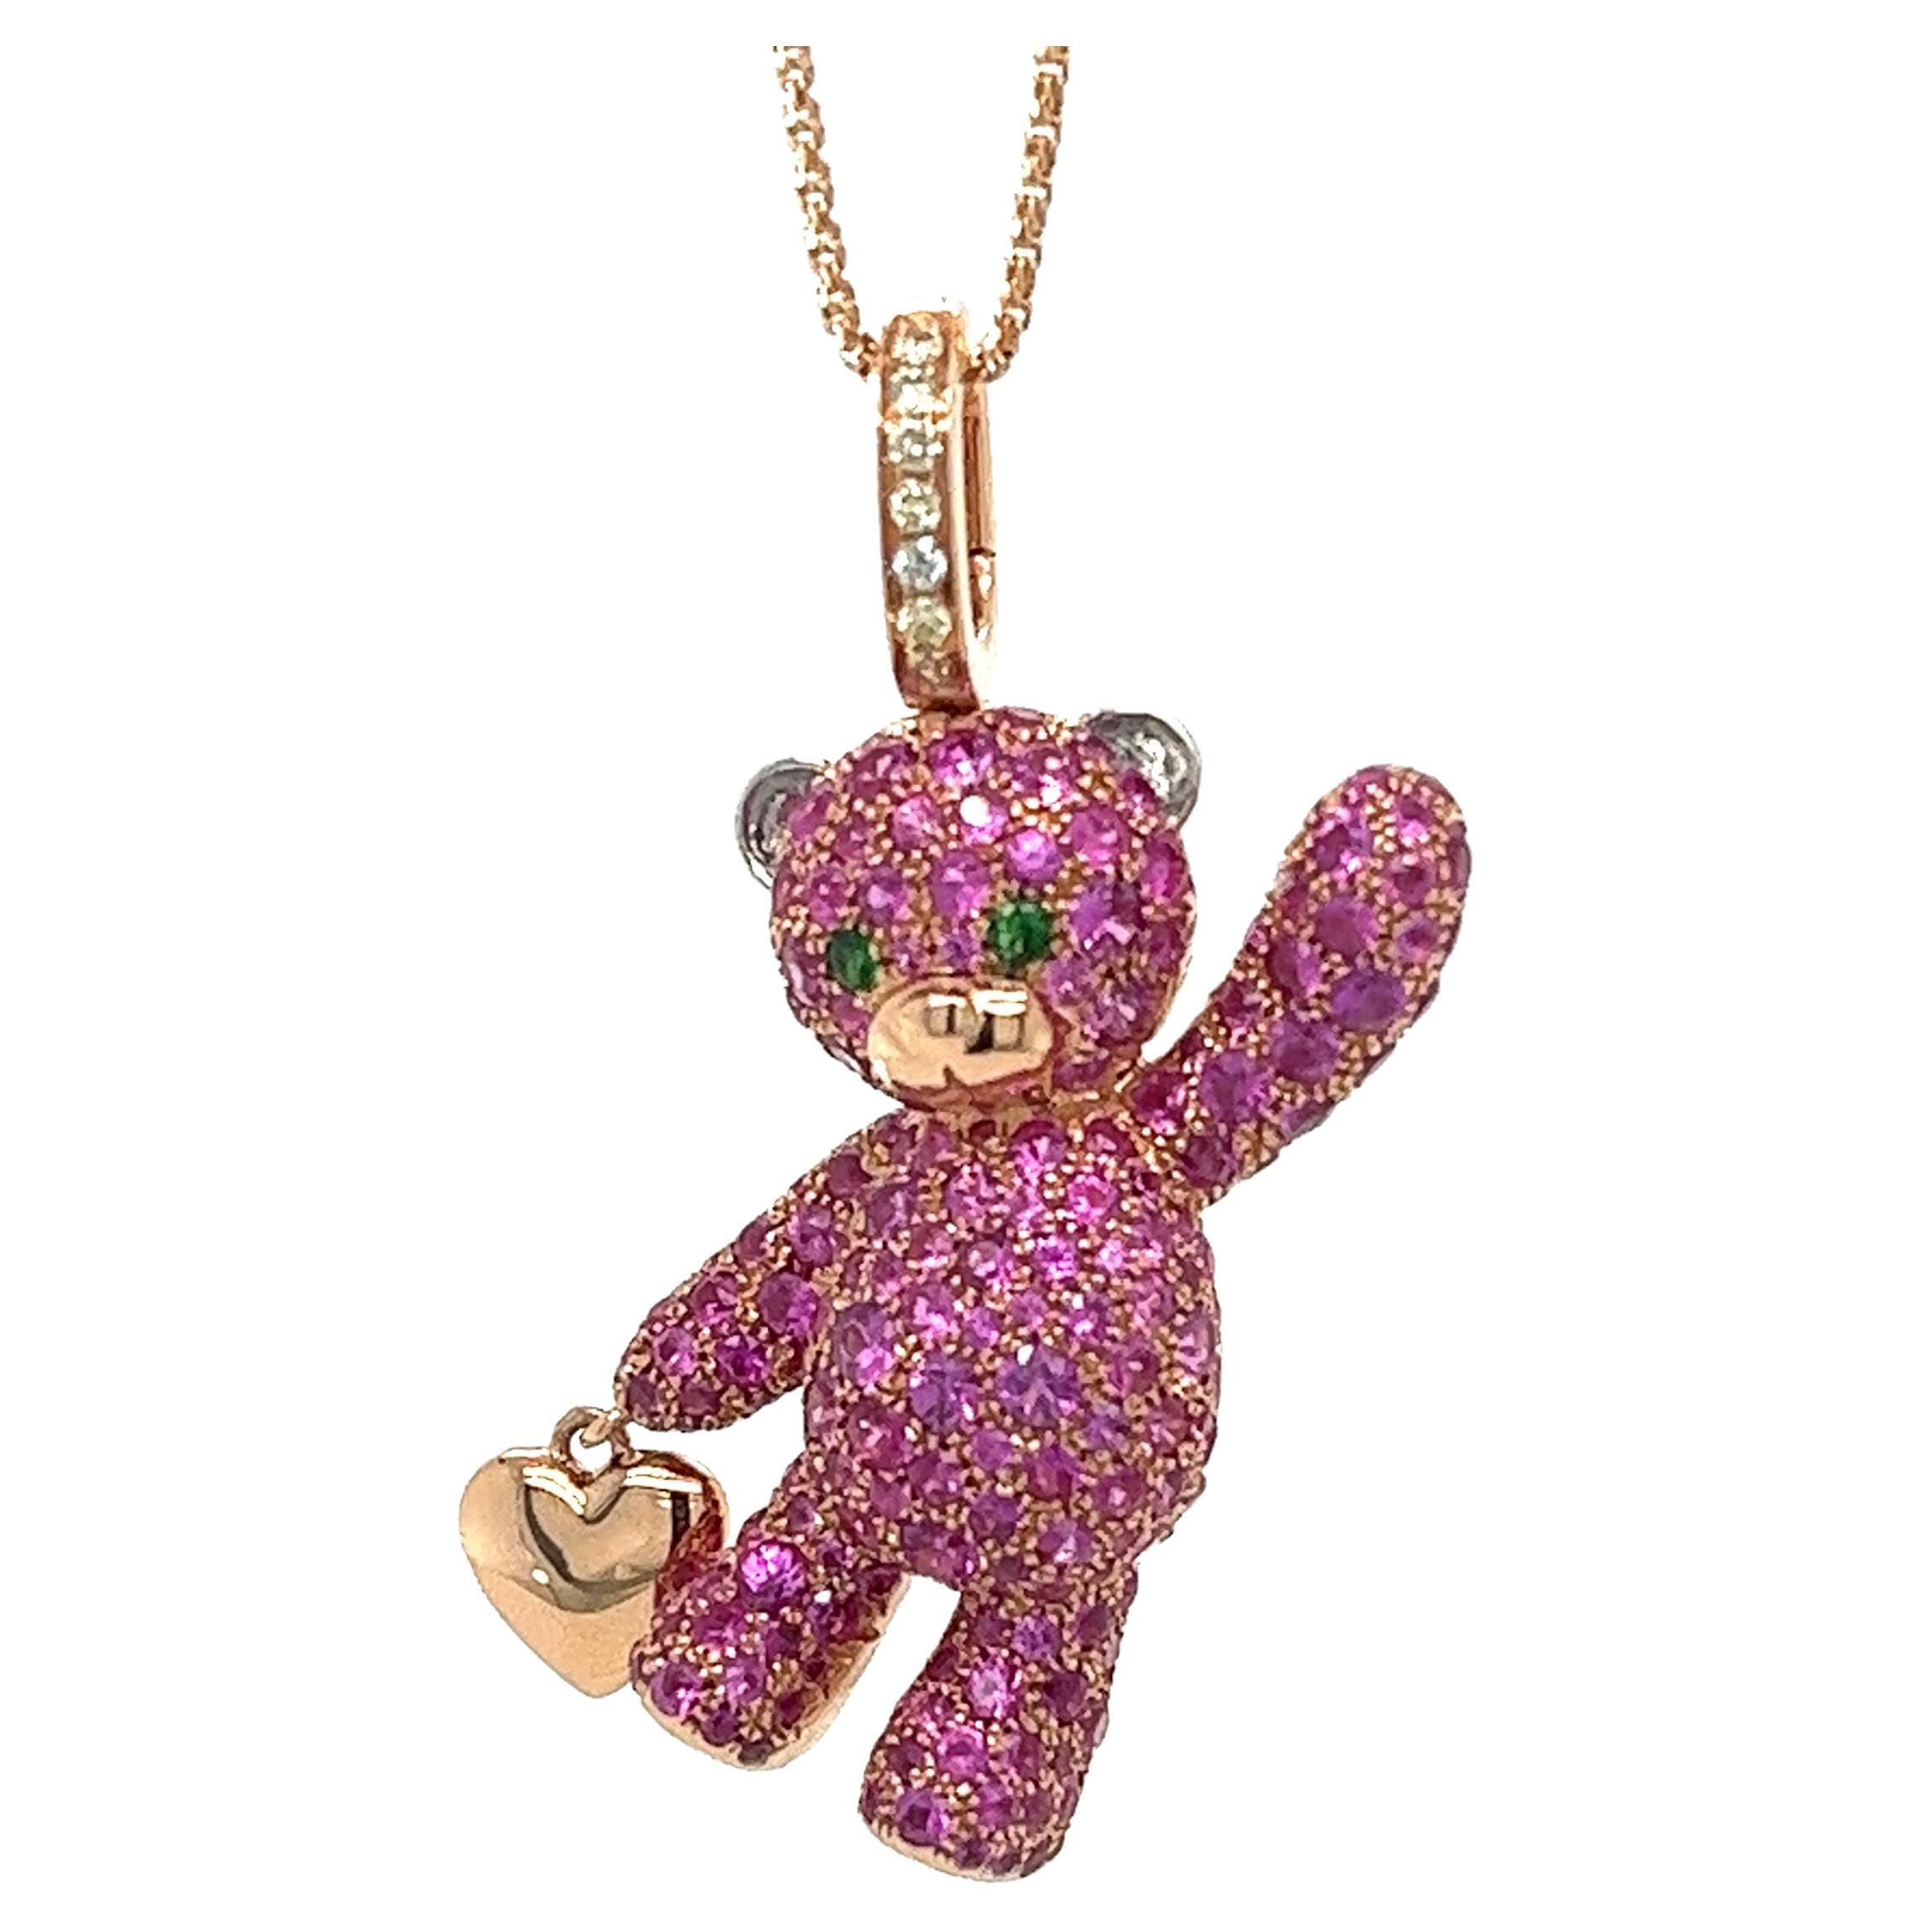 14ky Bear on Chain Necklace – The Golden Bear